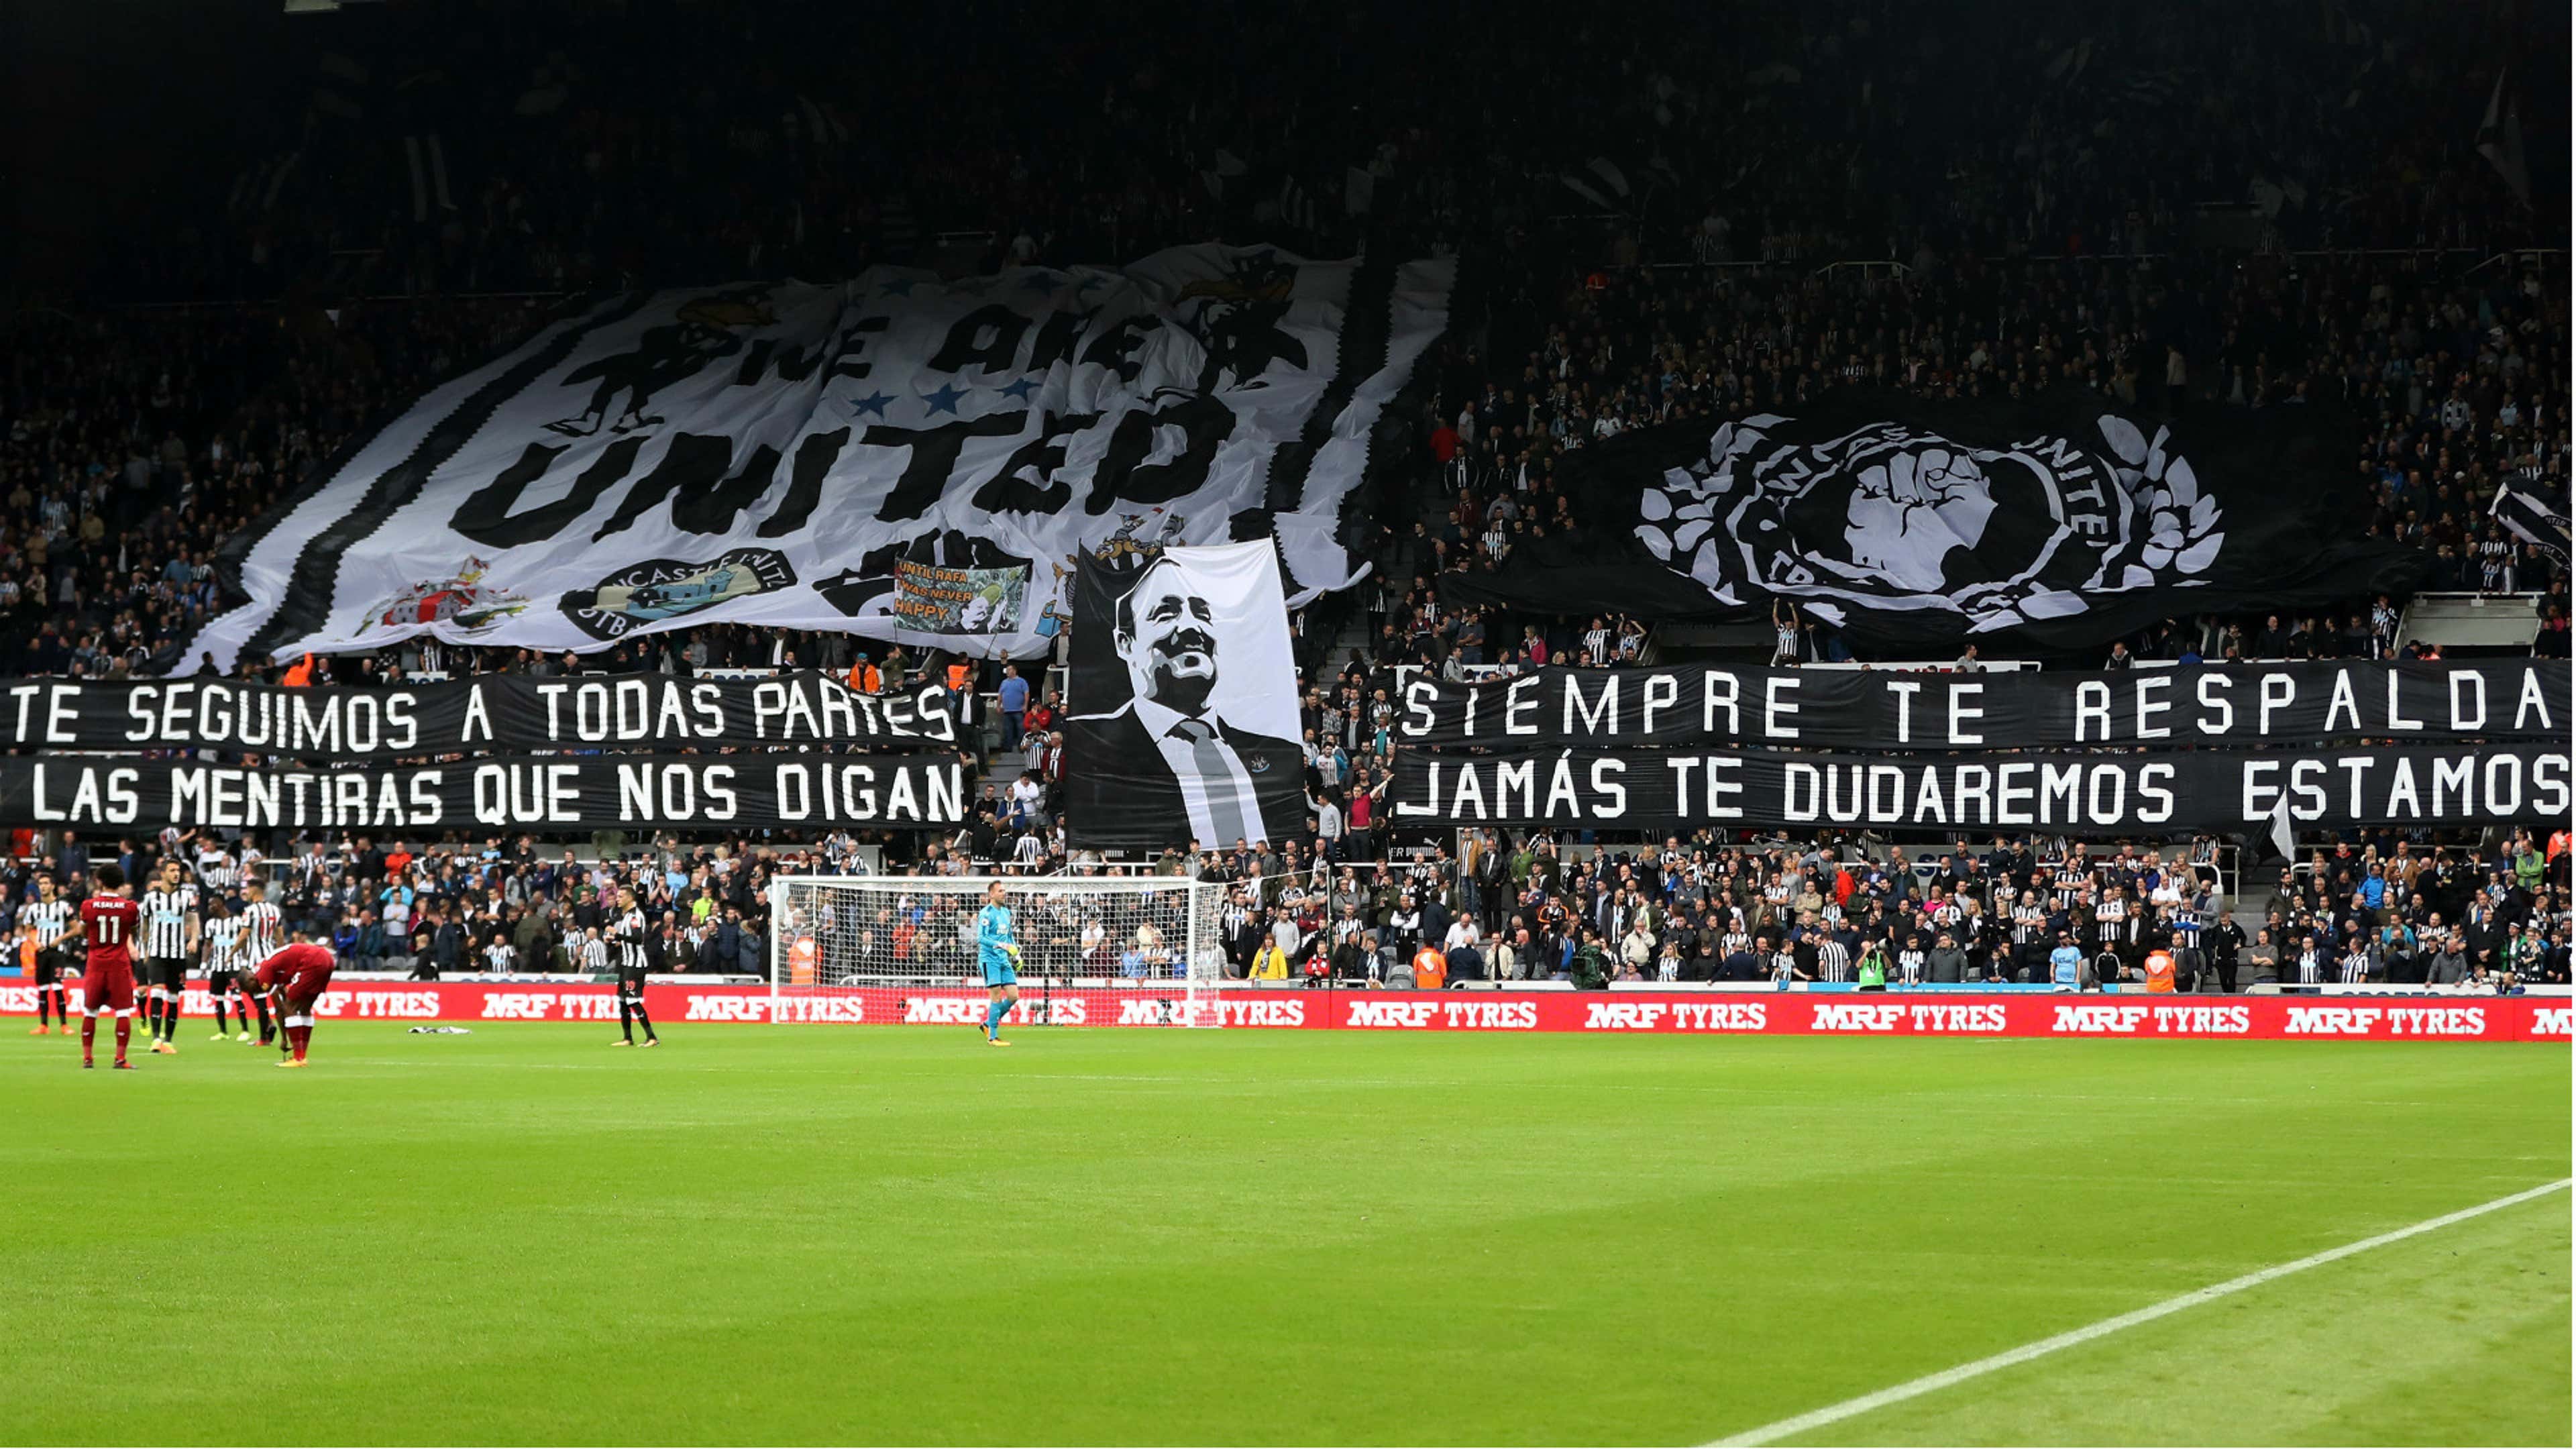 Newcastle Rafa Benitez banner